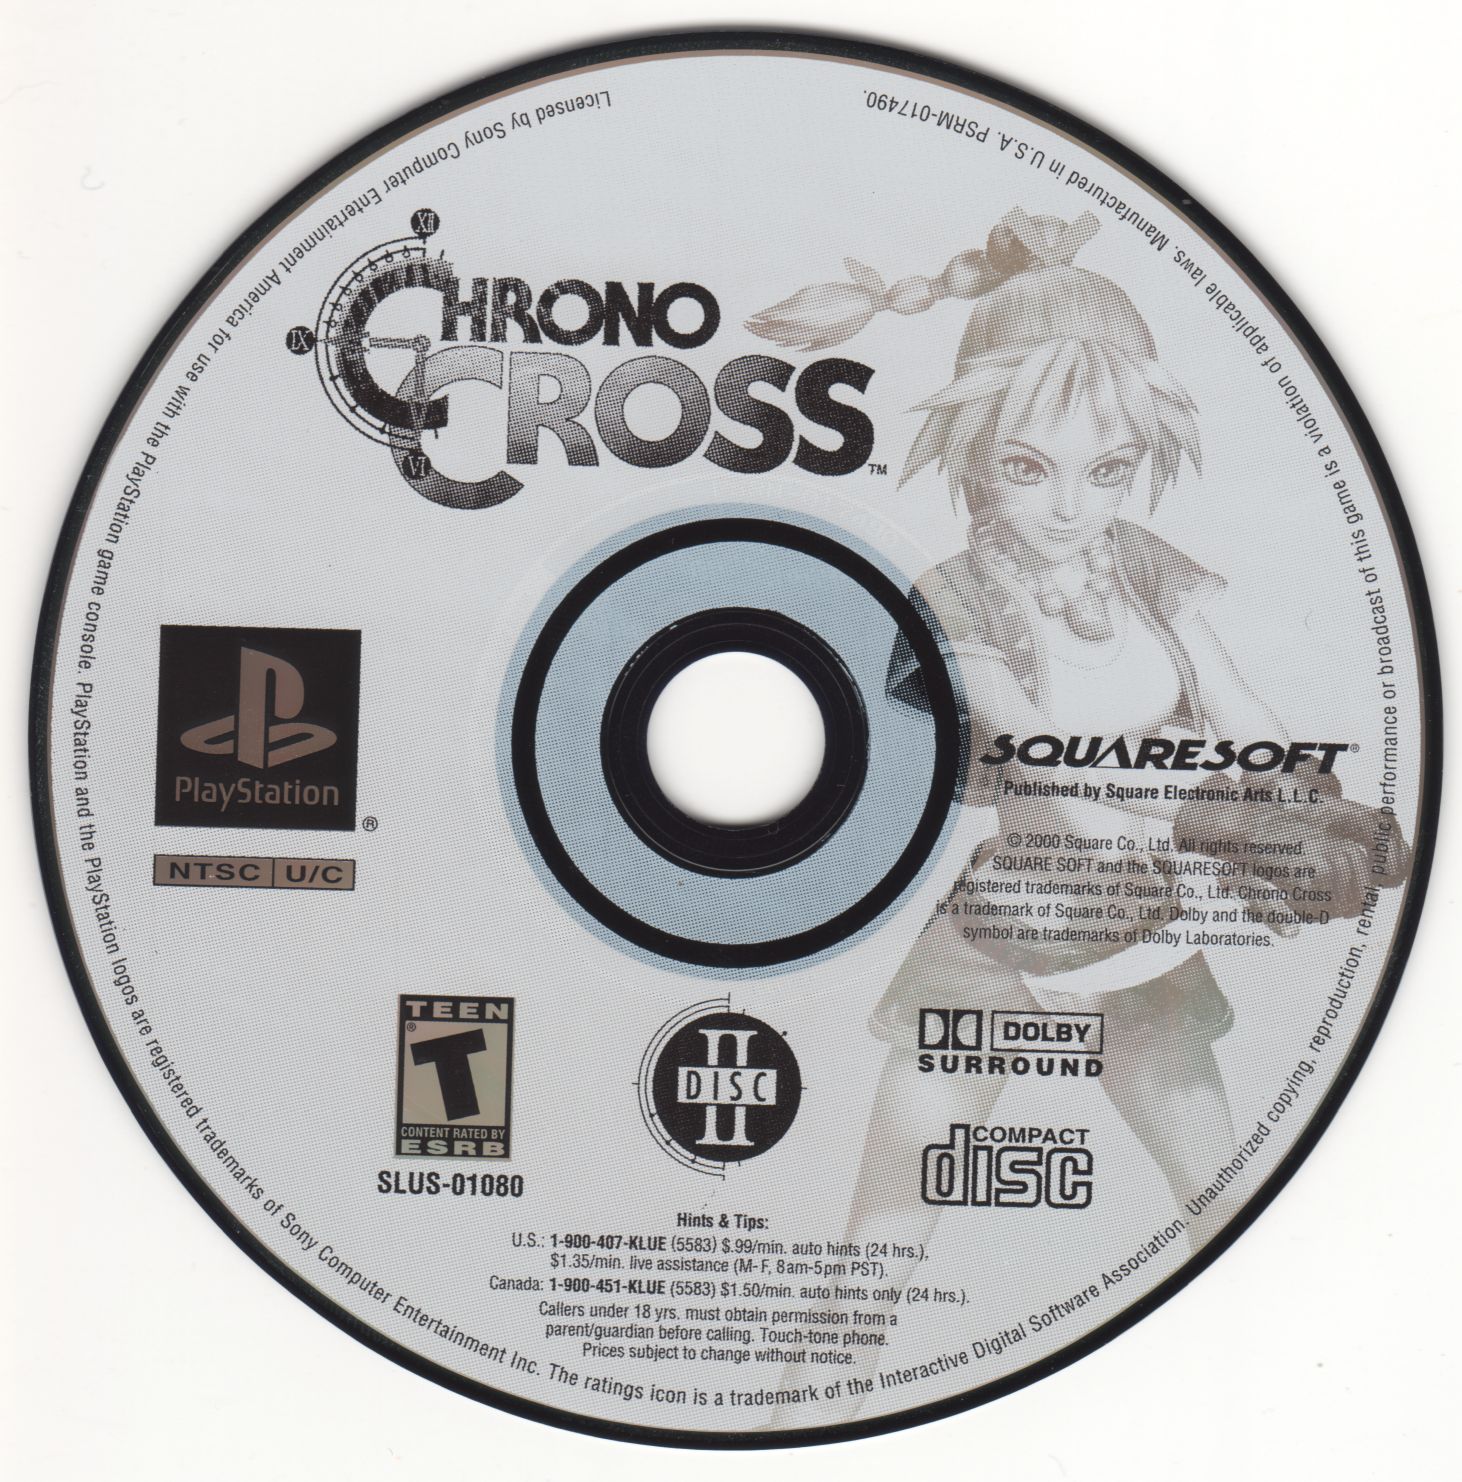 Chrono Cross [Disc1of2] [SLUS-01041] ROM Download - Sony PSX/PlayStation 1( PSX)